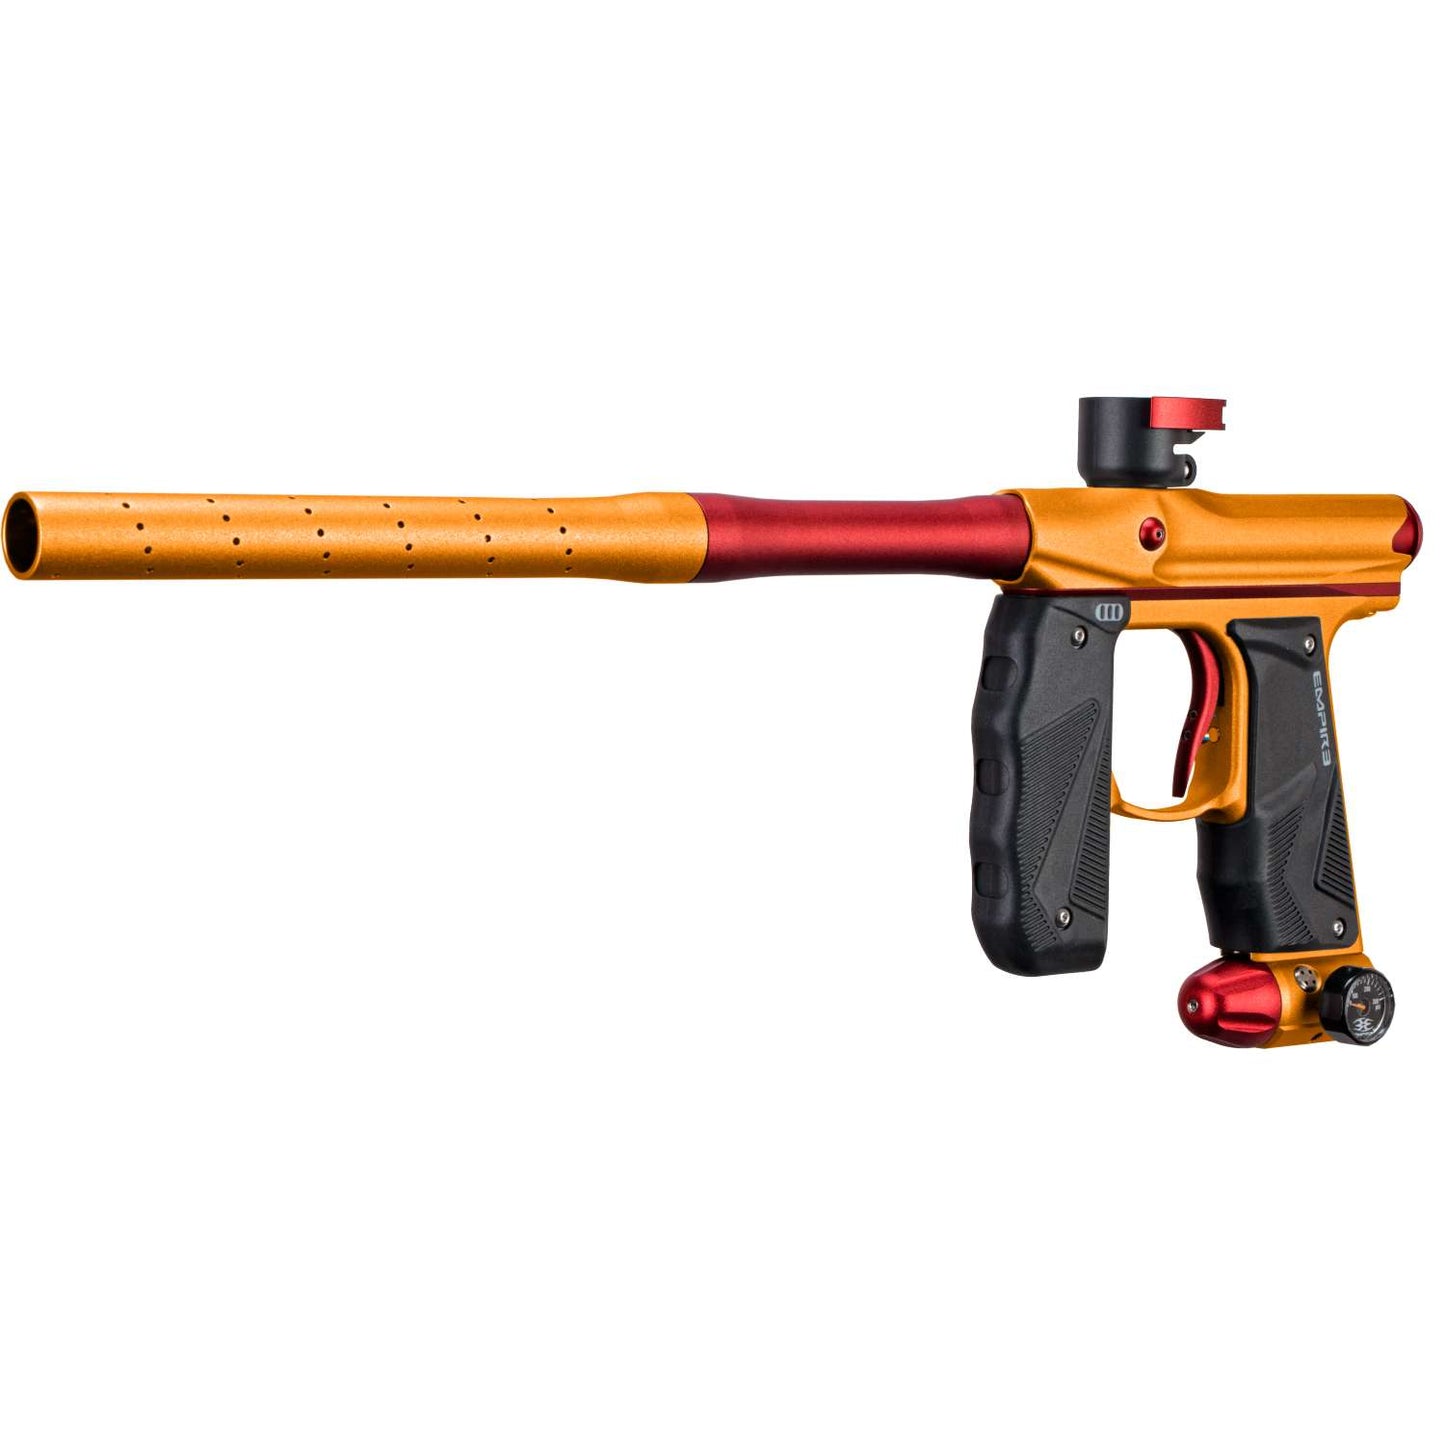 Empire Mini GS Paintball Gun w/ 2 Piece Barrel - Dust Orange / Dust Red - Empire